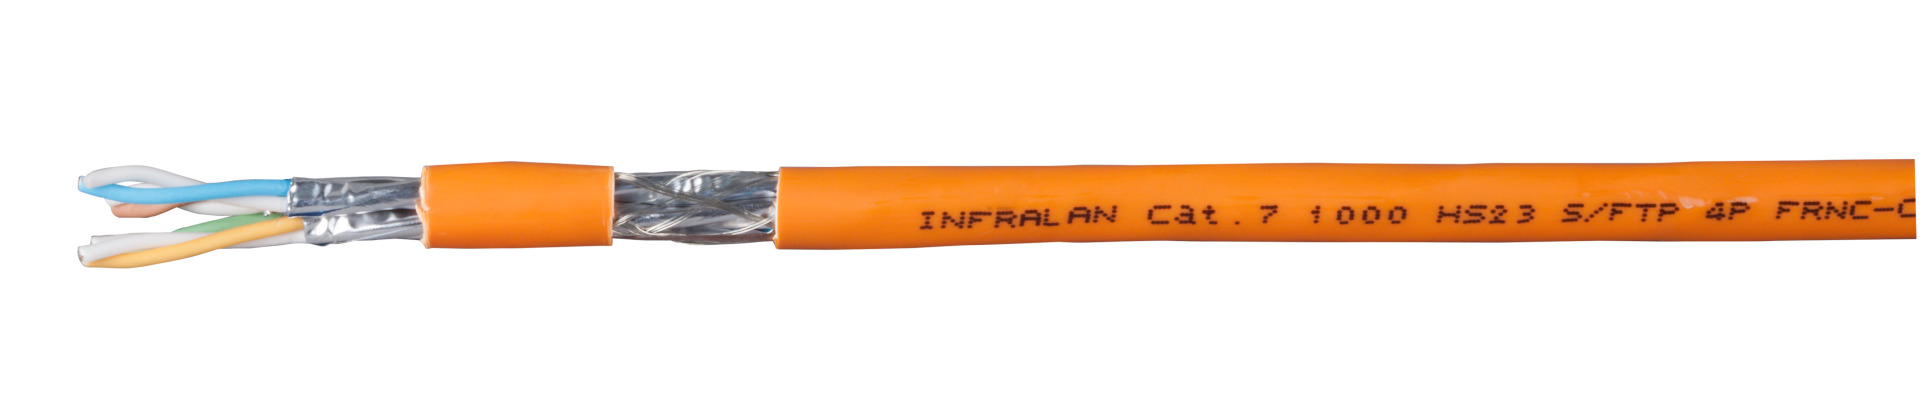 INFRALAN® Cat.7 1000 AWG23, S/FTP 4P CPR Cca orange, 100m